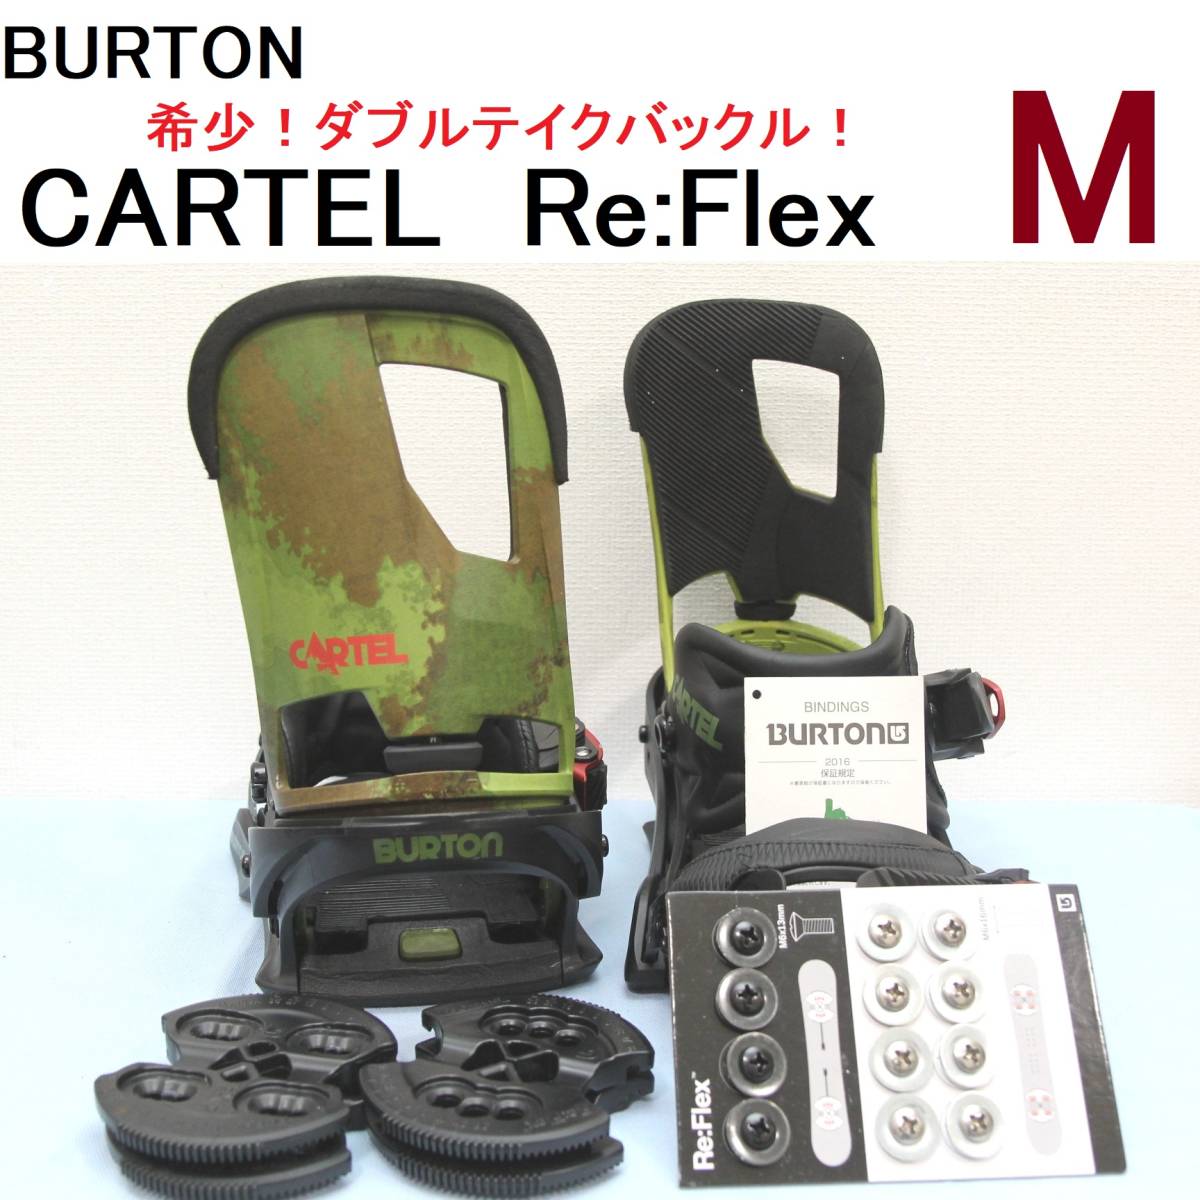 BURTON CARTEL Re:flex Mサイズ 19-20モデル - スノーボード